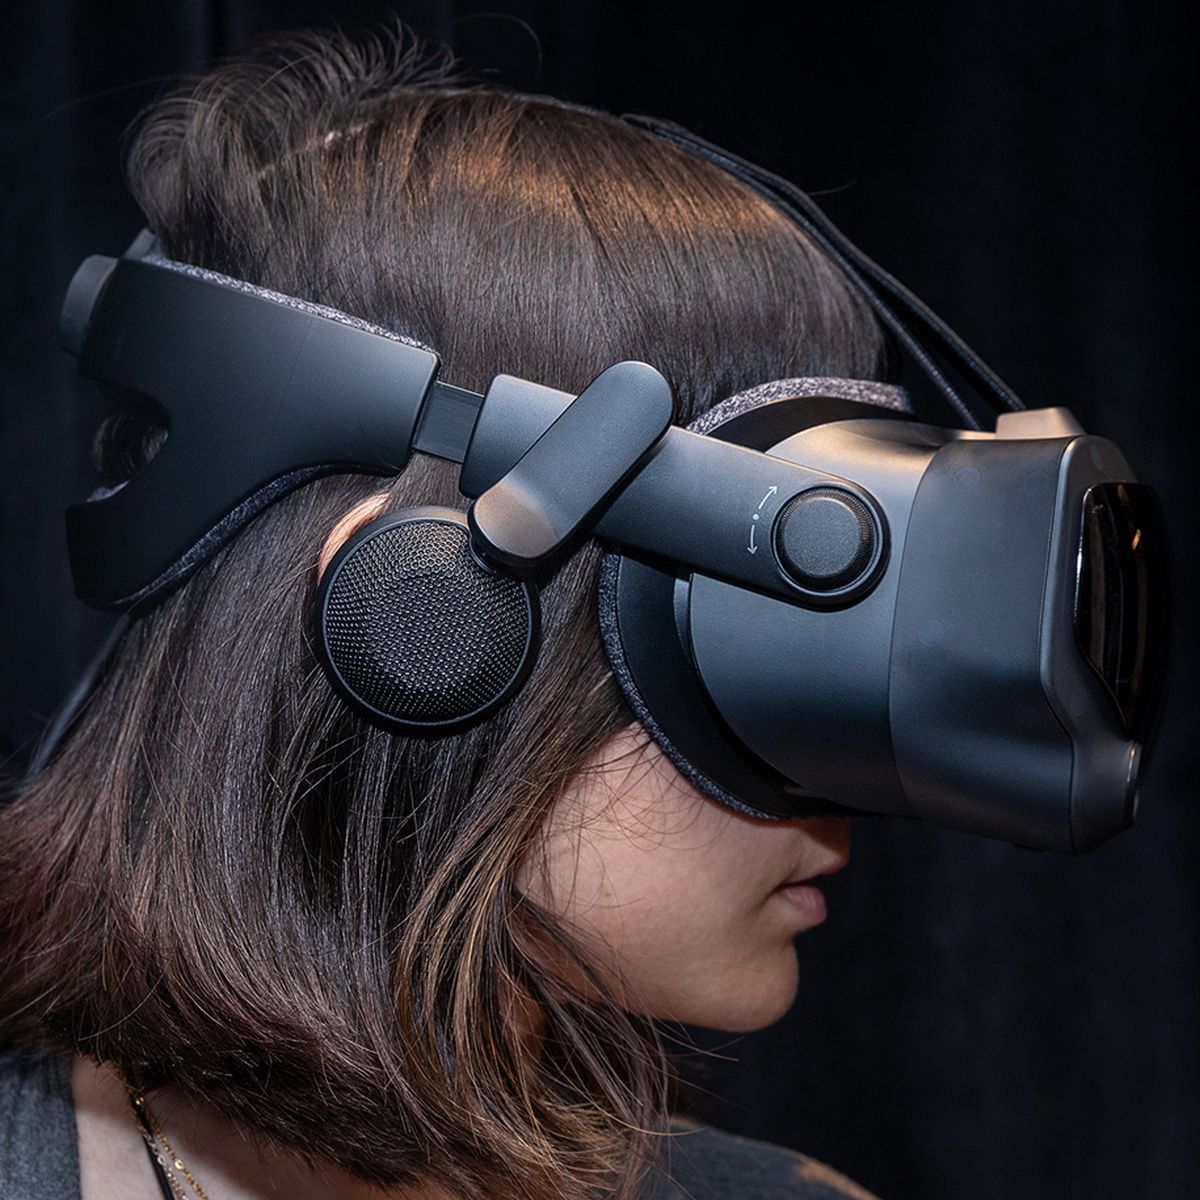 Woman wearing Valve Index VR headset